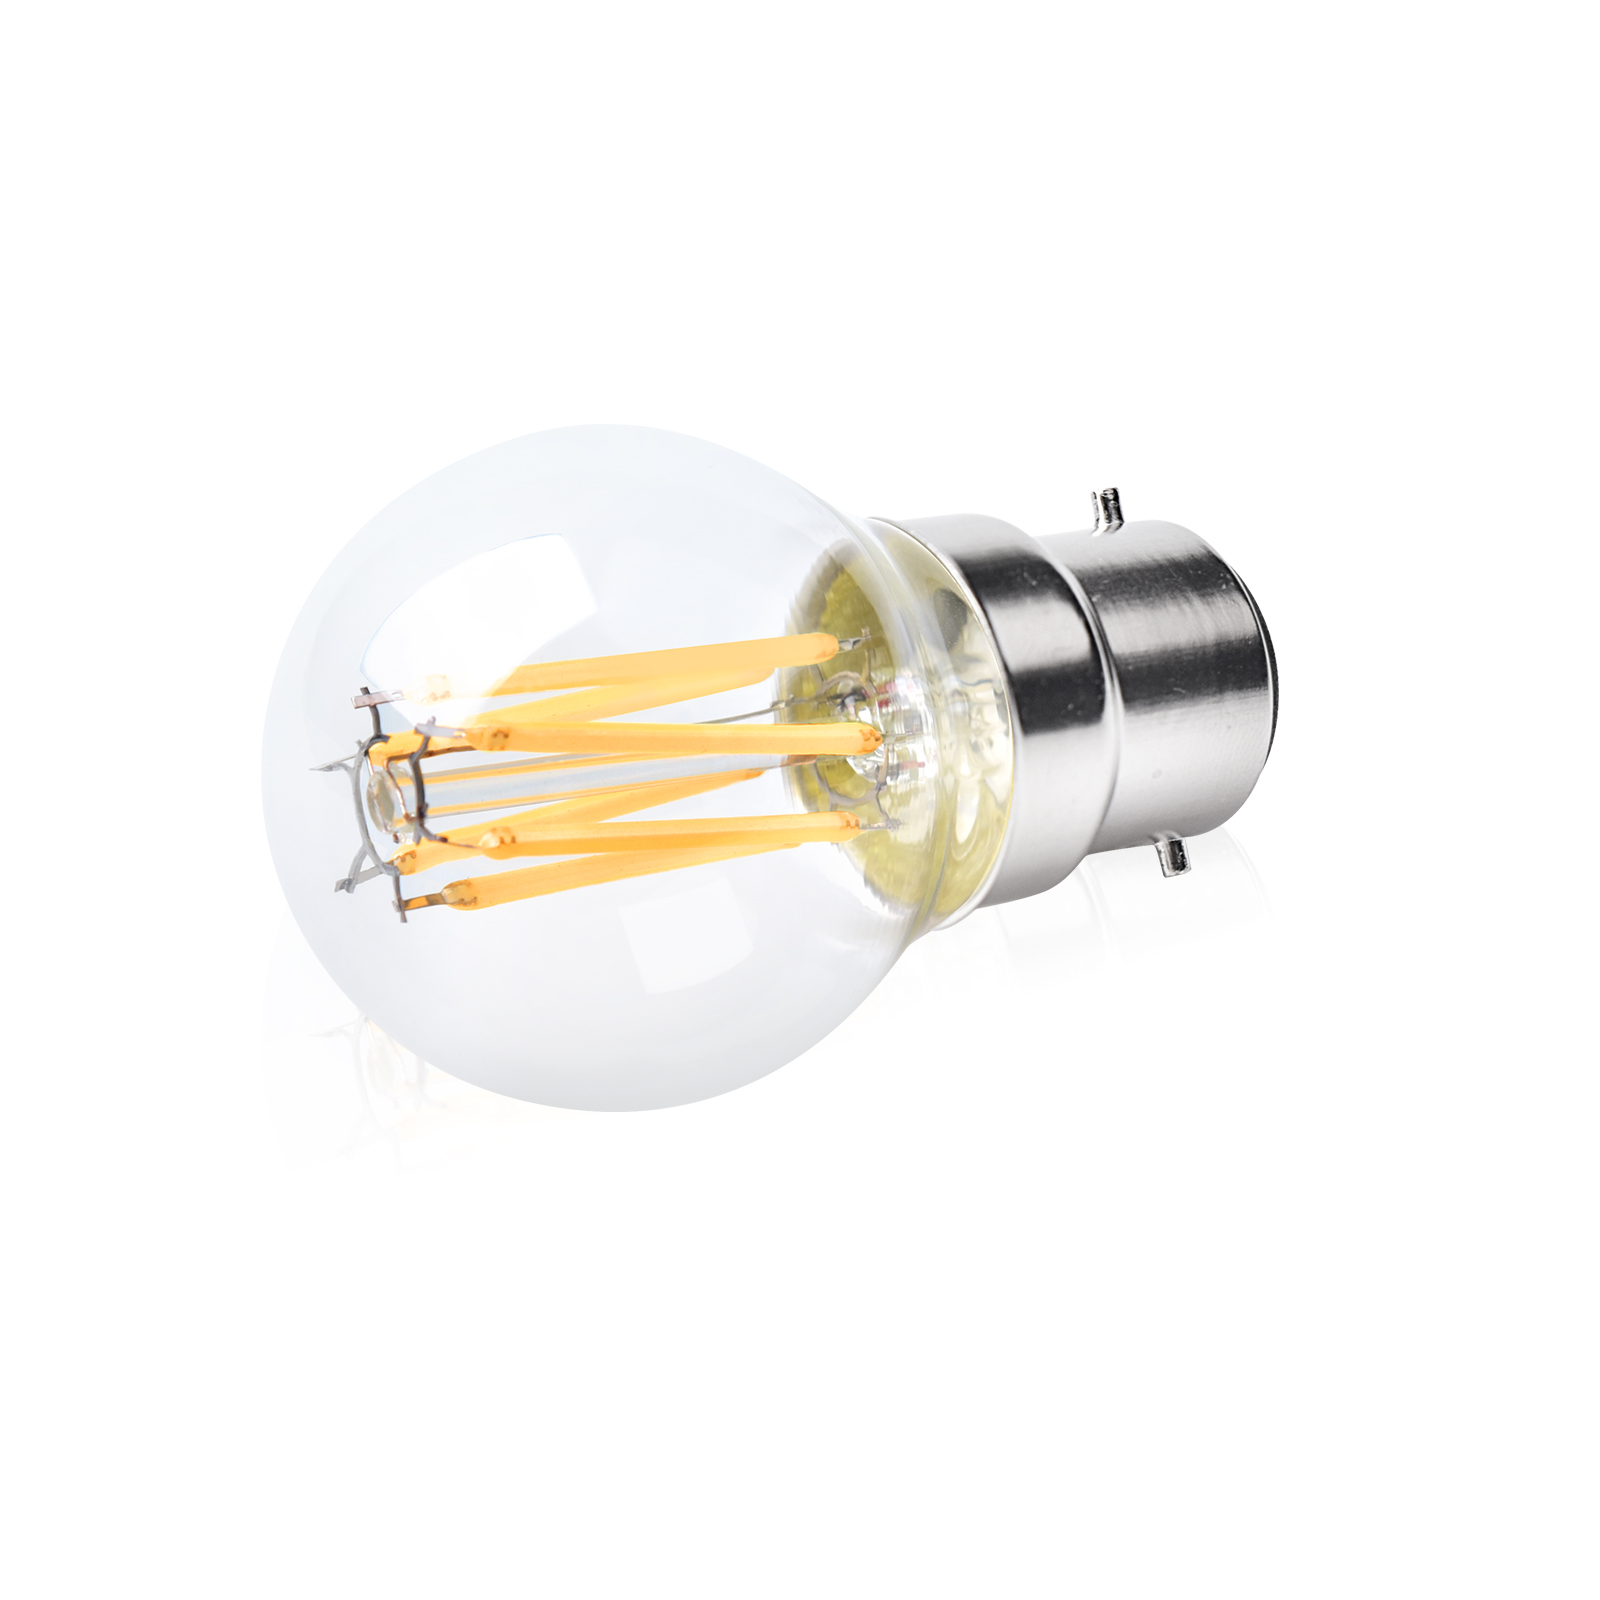 6W G45 B22 LED Vintage Light Bulb